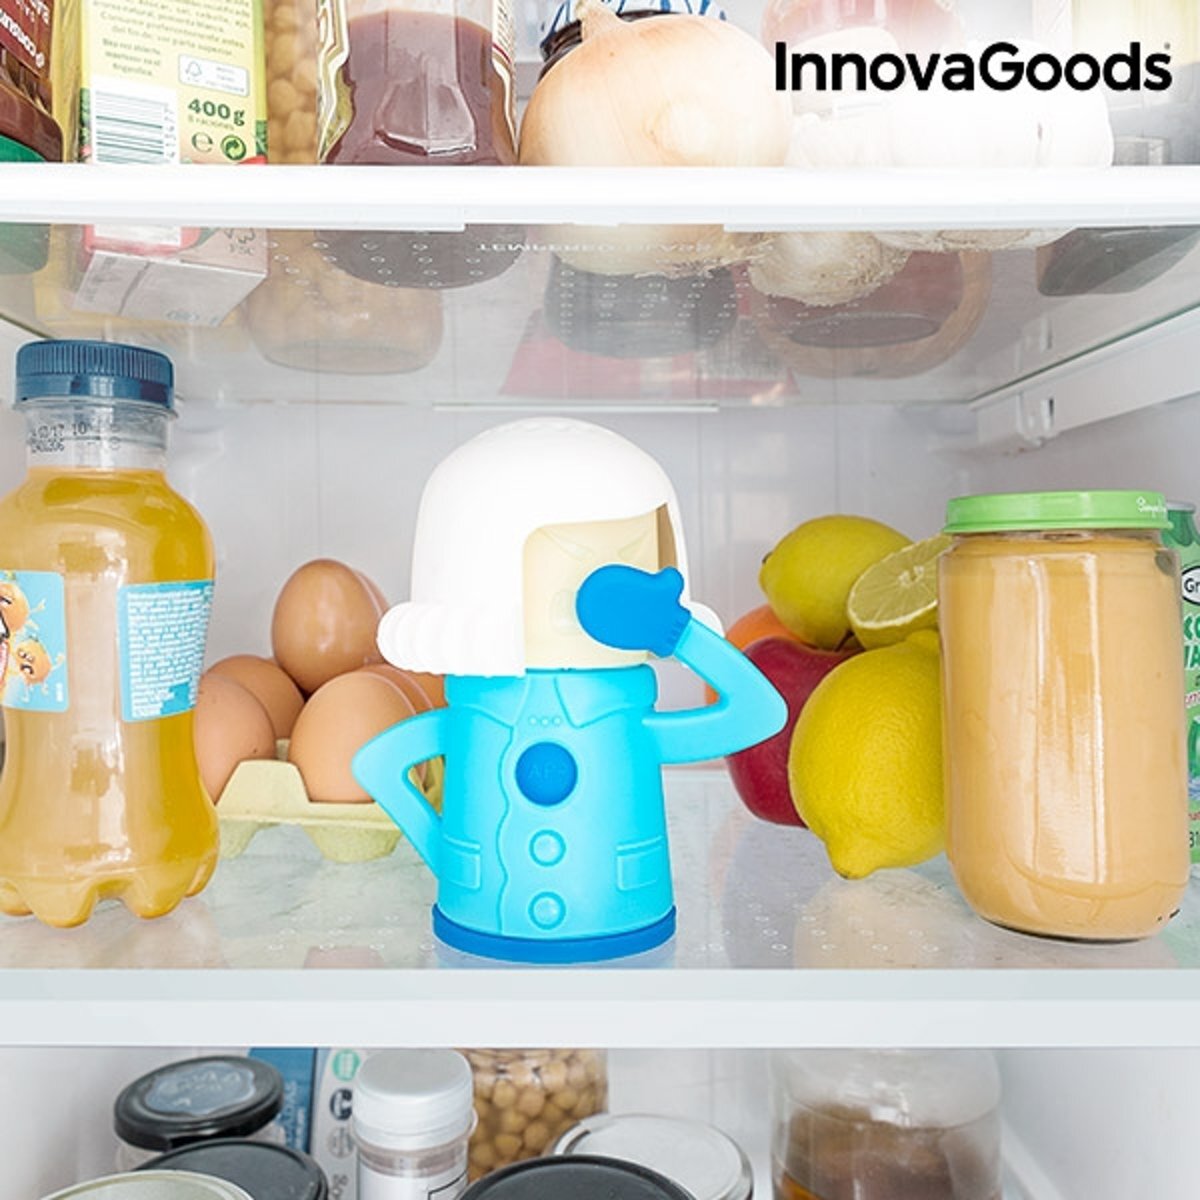 Innovagoods koelkast geurverdrijver - Bescherm je koelkast tegen nare geurtjes